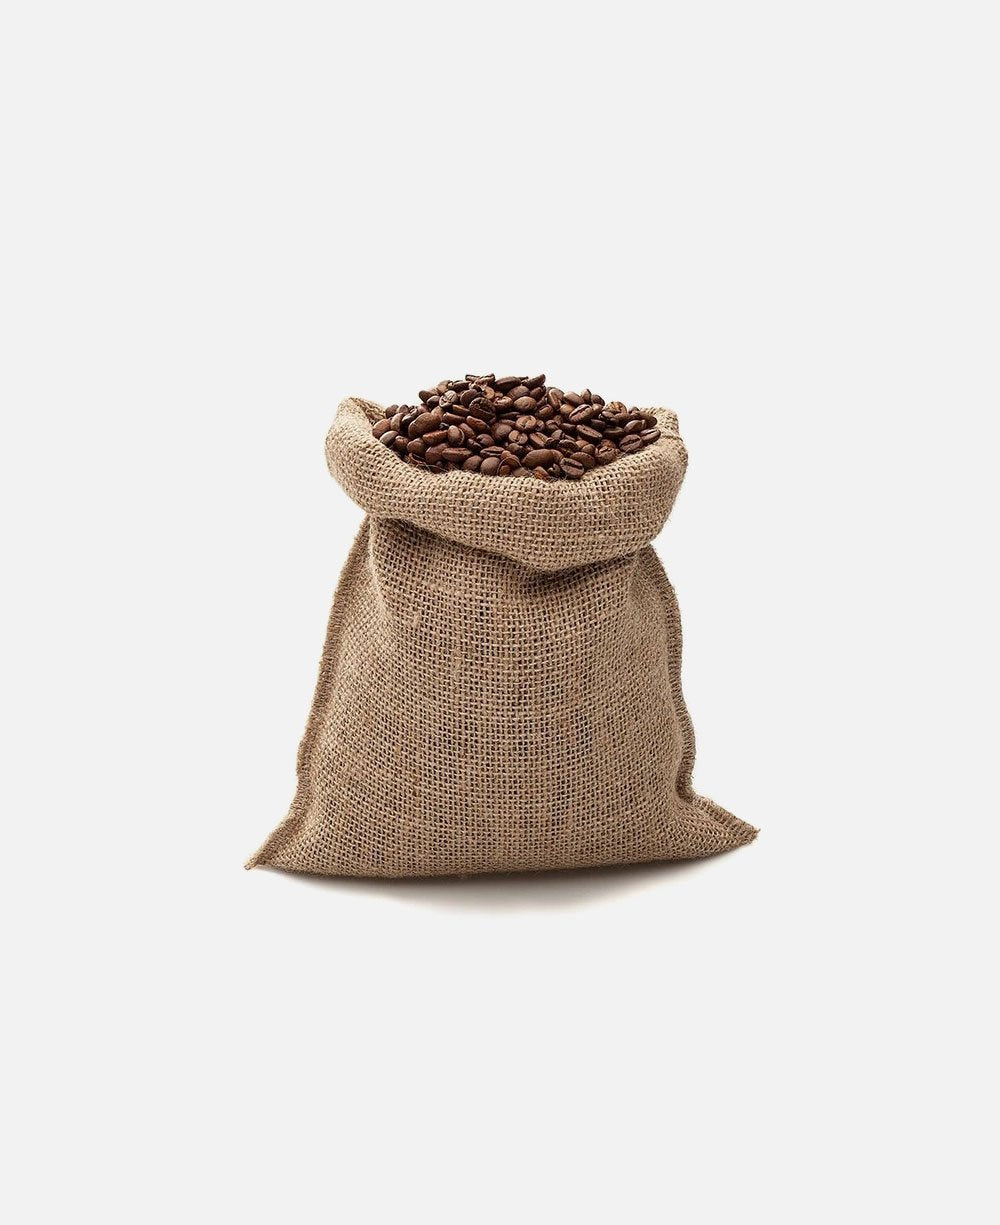 Coffee beans Robusta